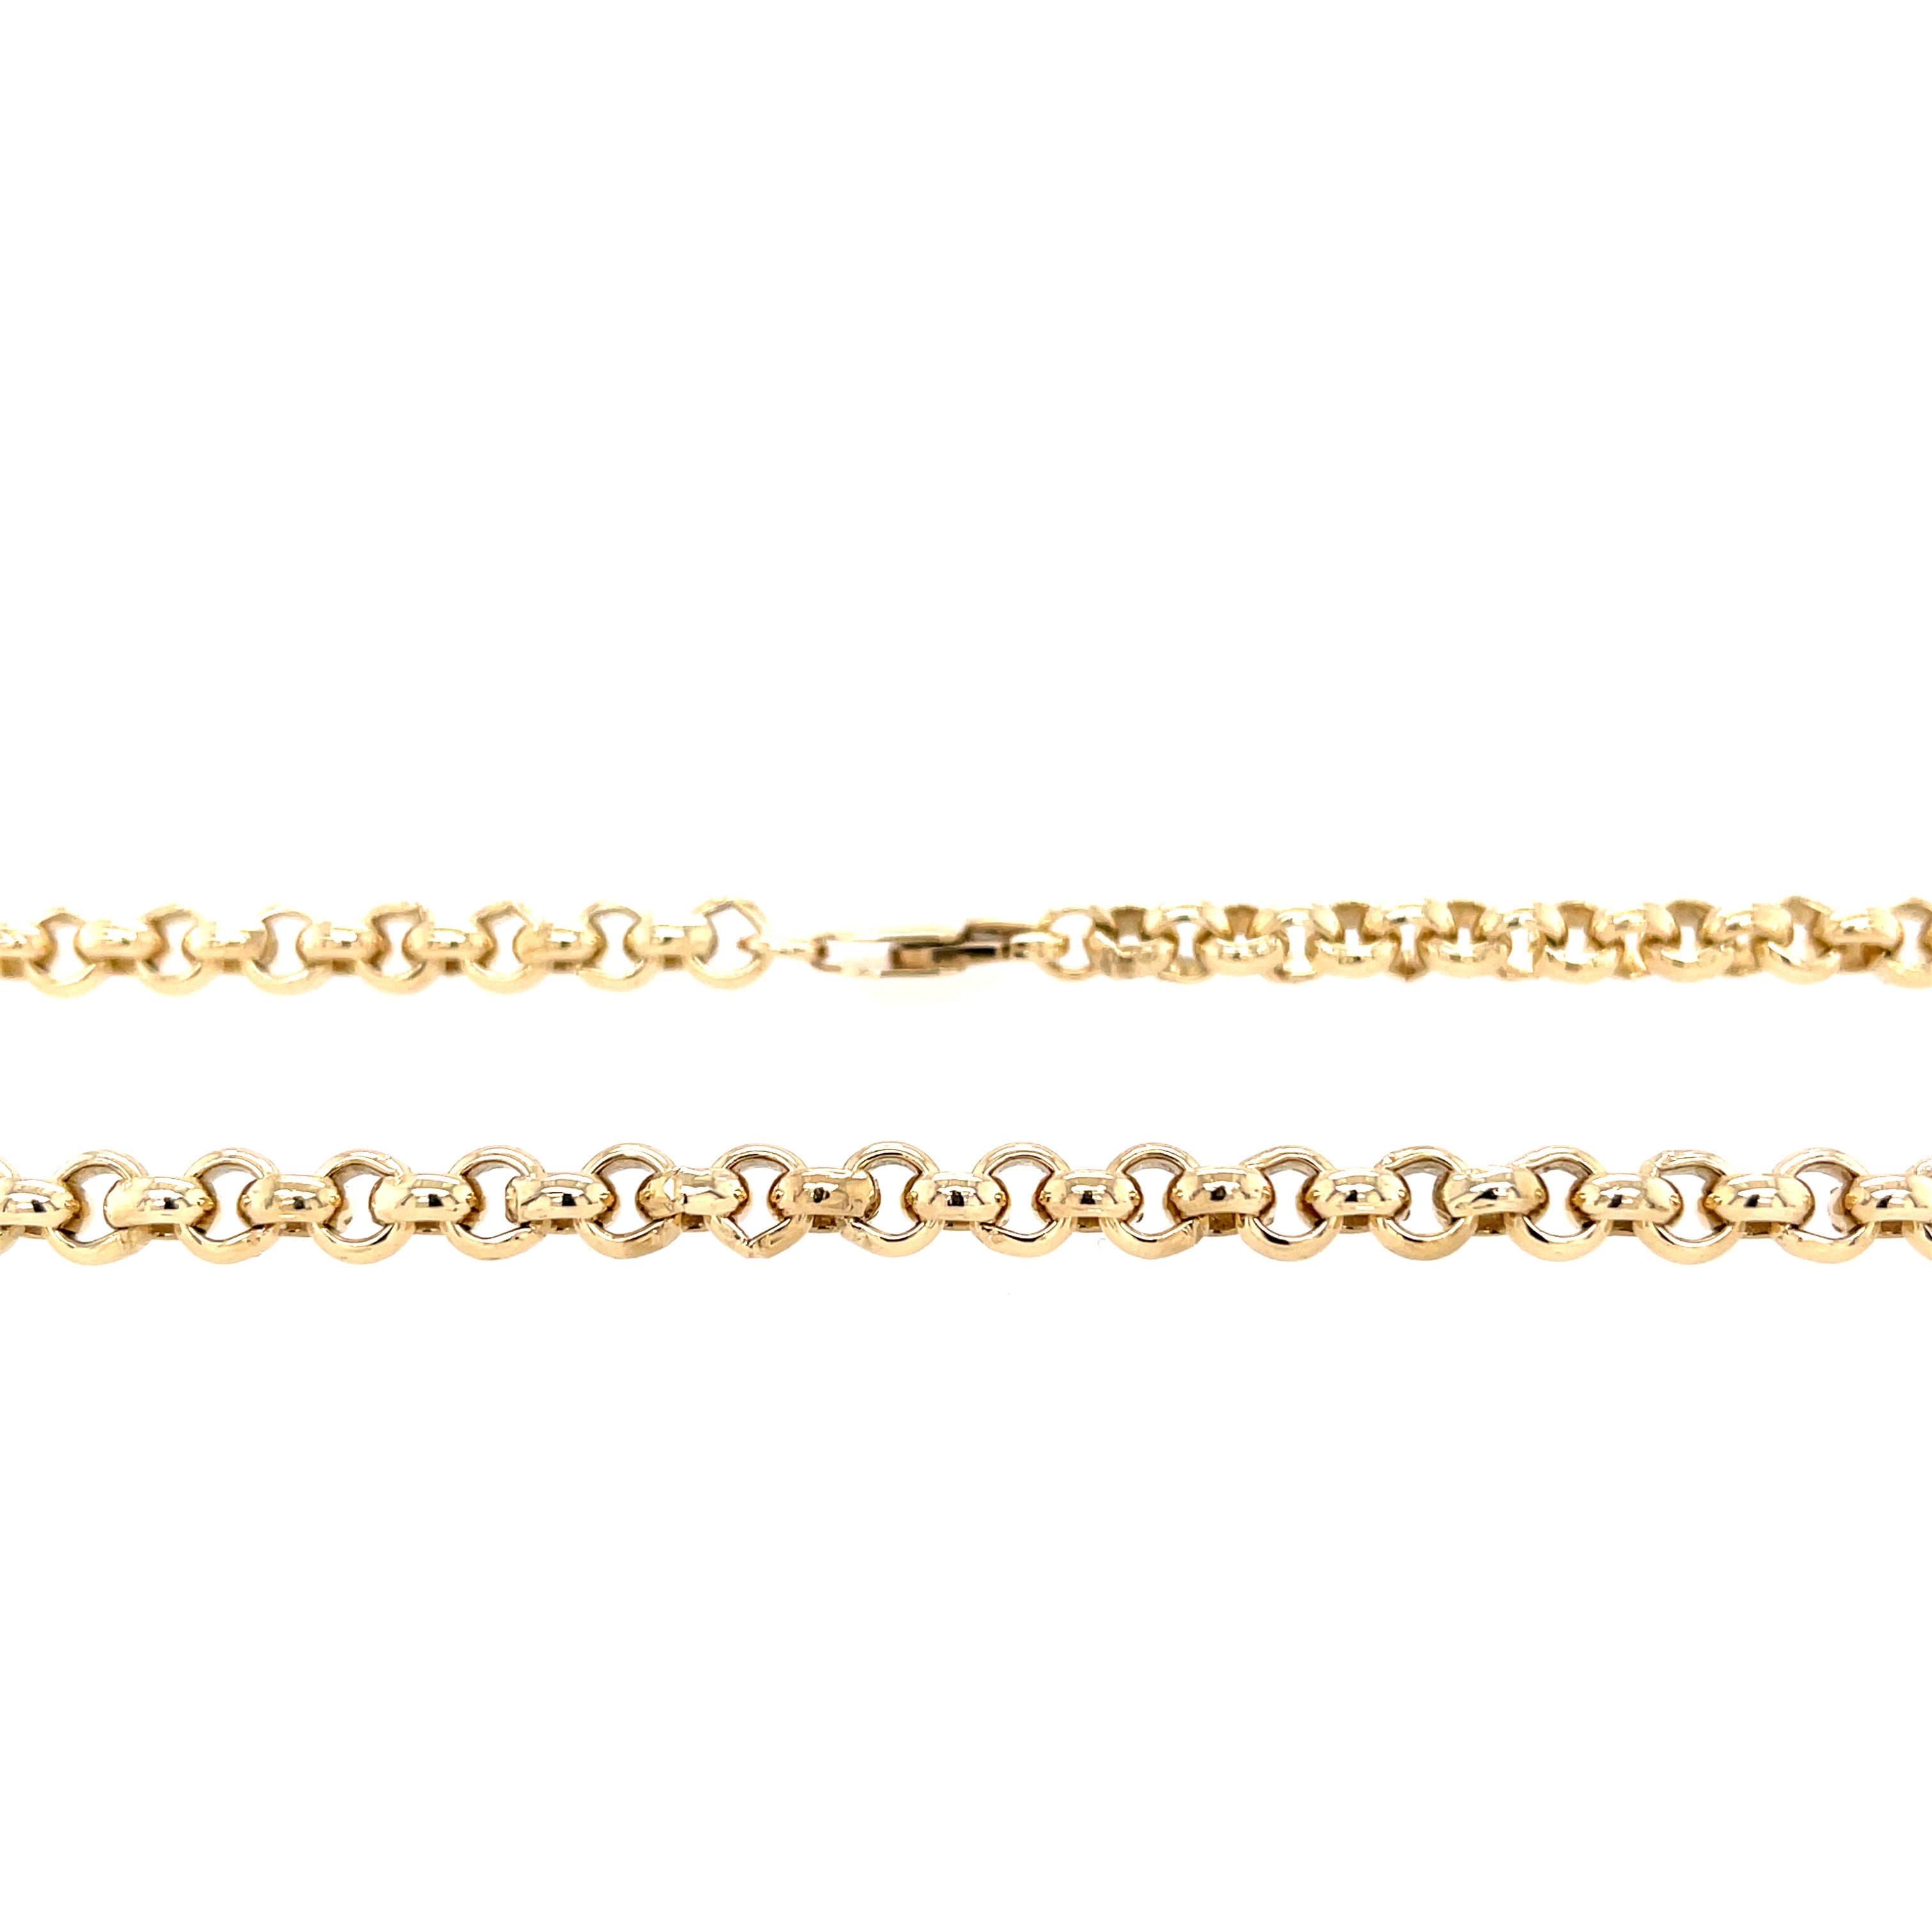 9ct Yellow Gold Round Link 24" Heavy Belcher Chain - 48.60g SOLD